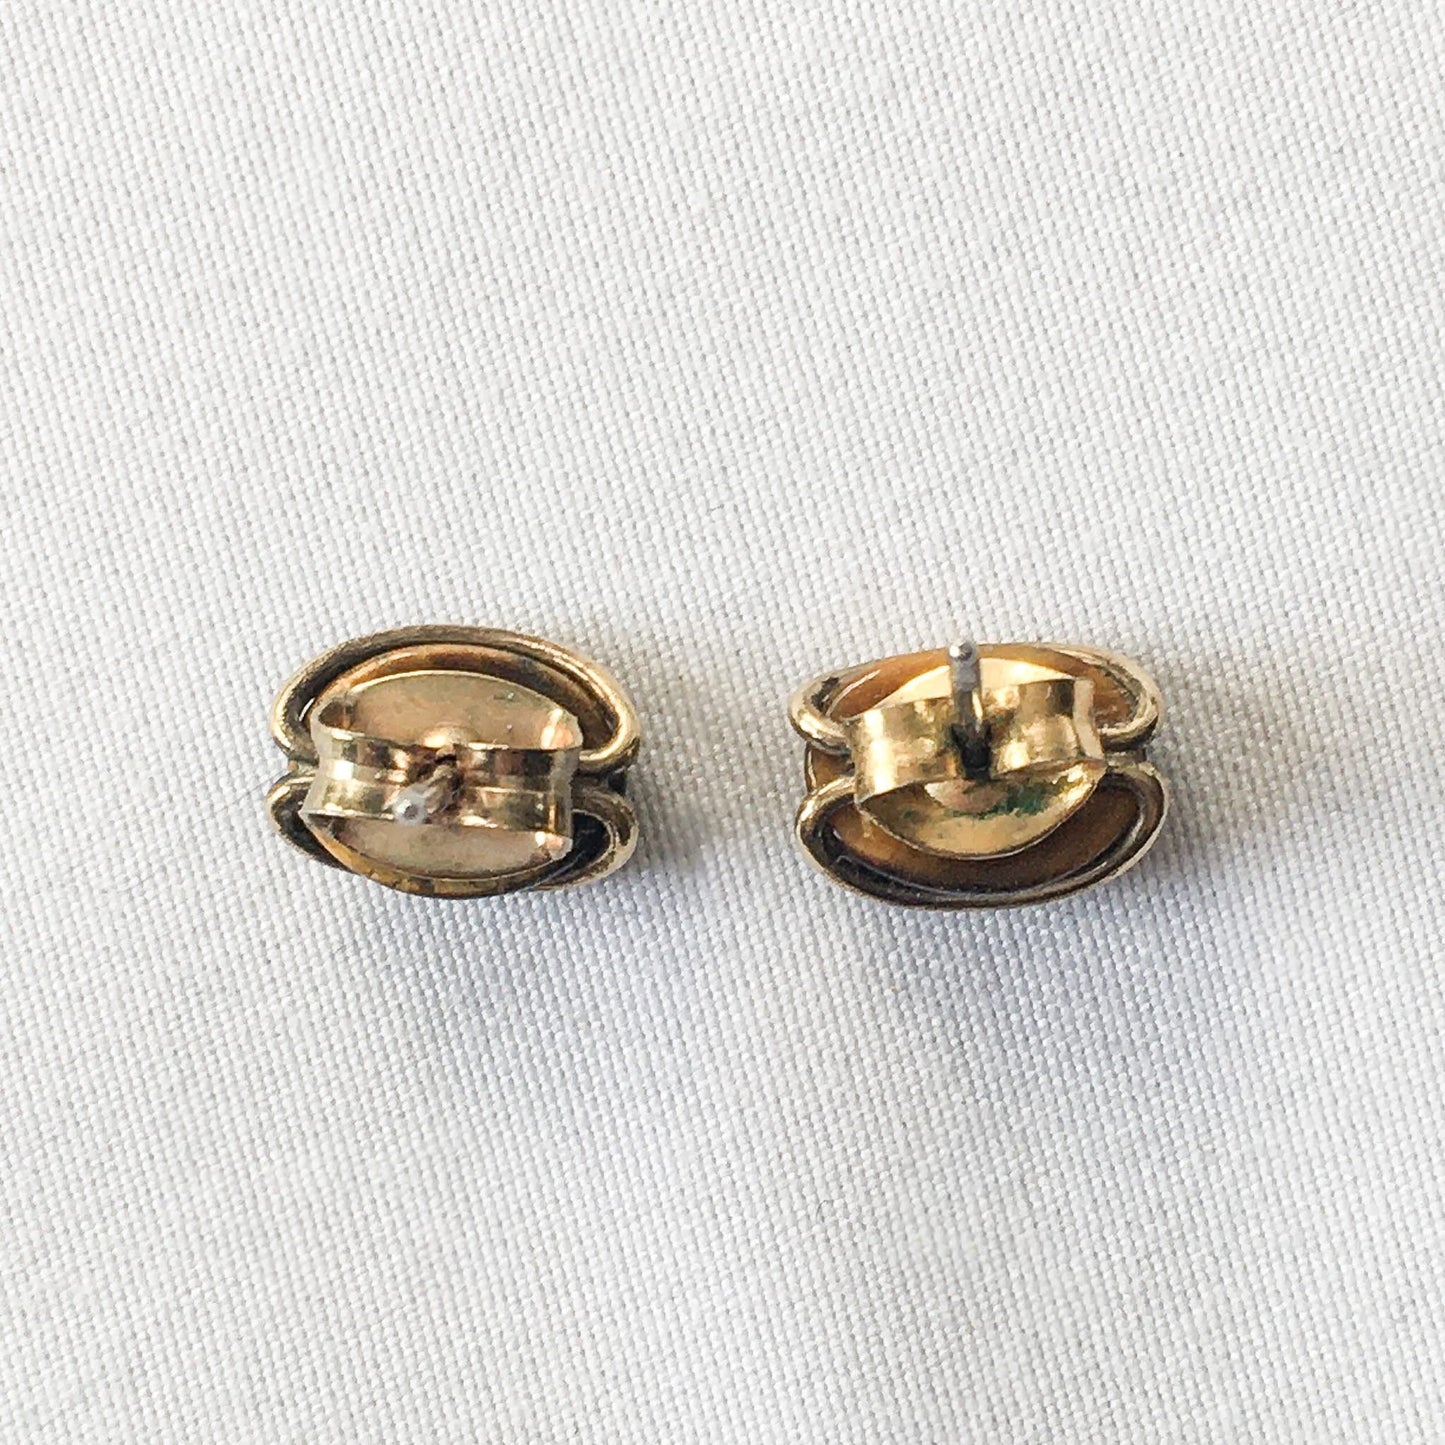 Vintage WELLS Tigers Eye Ring, Pin, and Earrings Set, Beautiful Matching Set